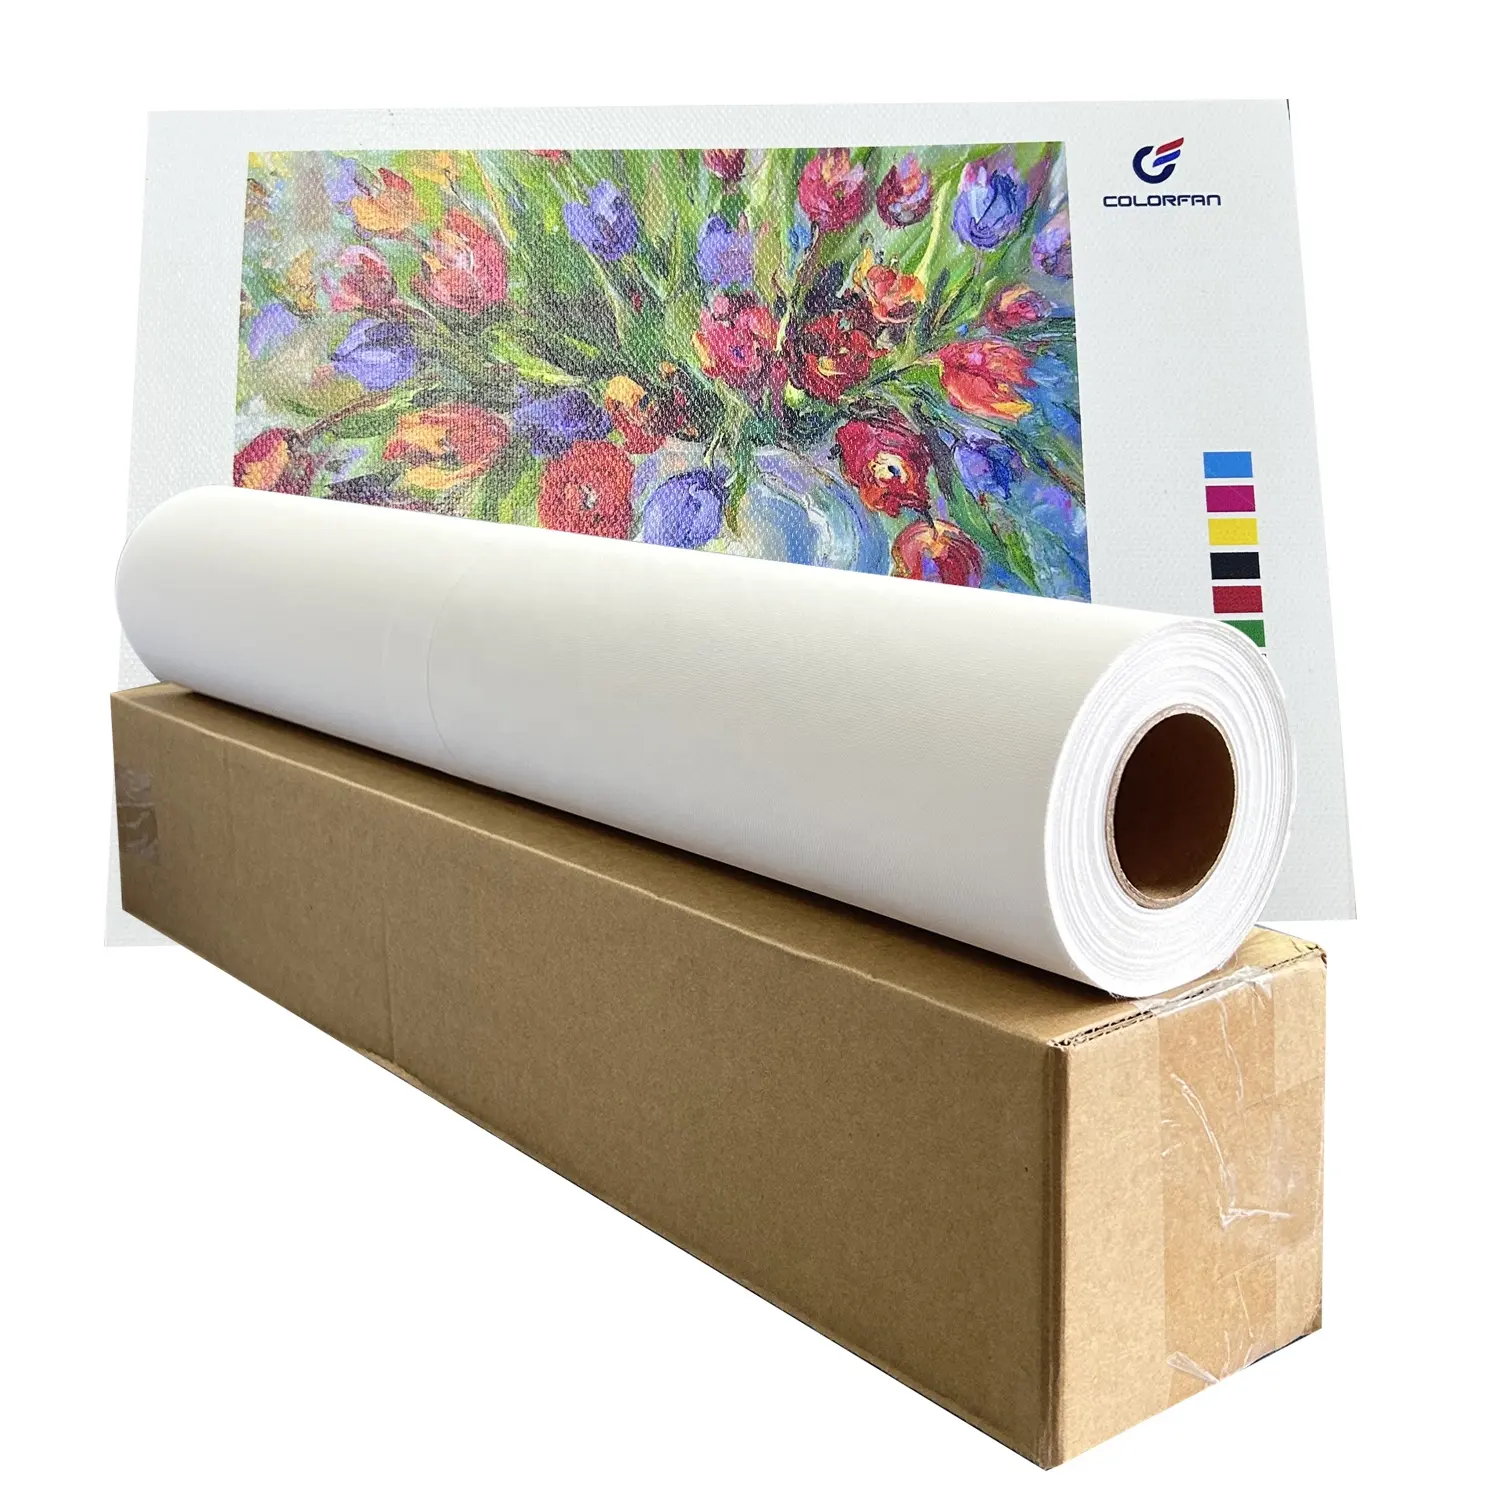 Colorfan 380g Grande Formato Poli Algodão Personalizado Em Branco Art Inkjet Canvas Roll